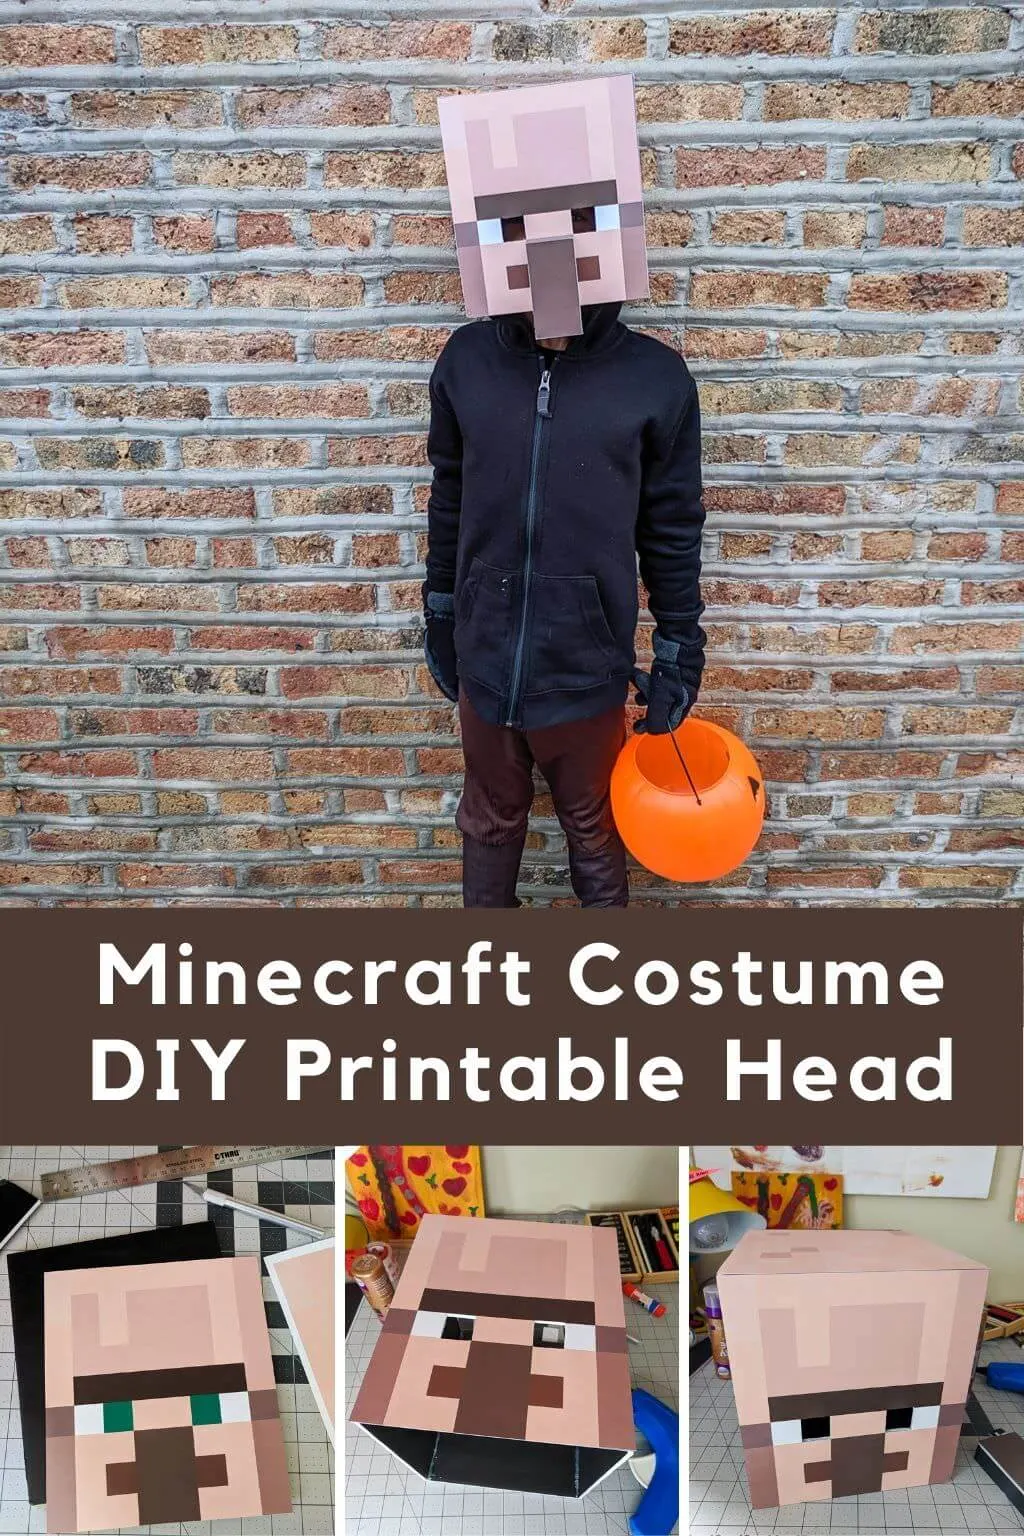 Minecraft costume DIY printable head